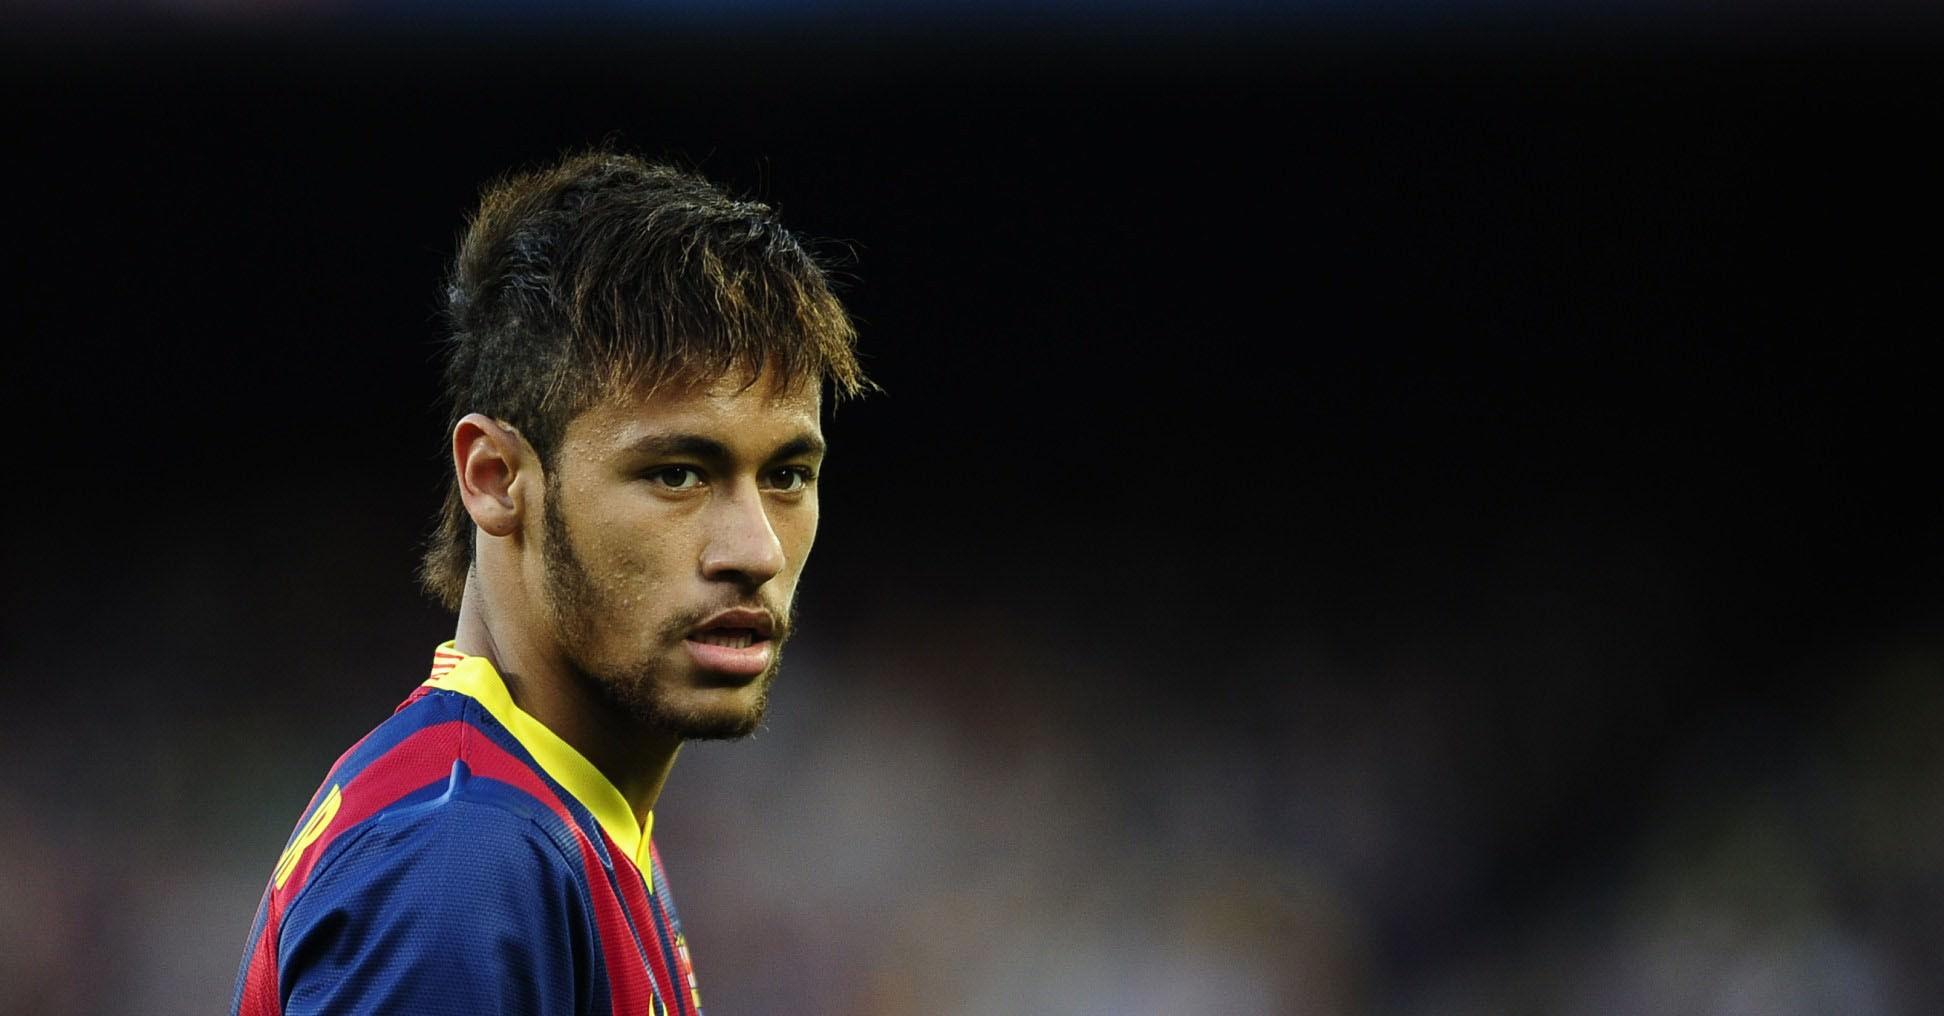 Neymar Hairstyle Picture Elegant Download Neymar Barcelona High